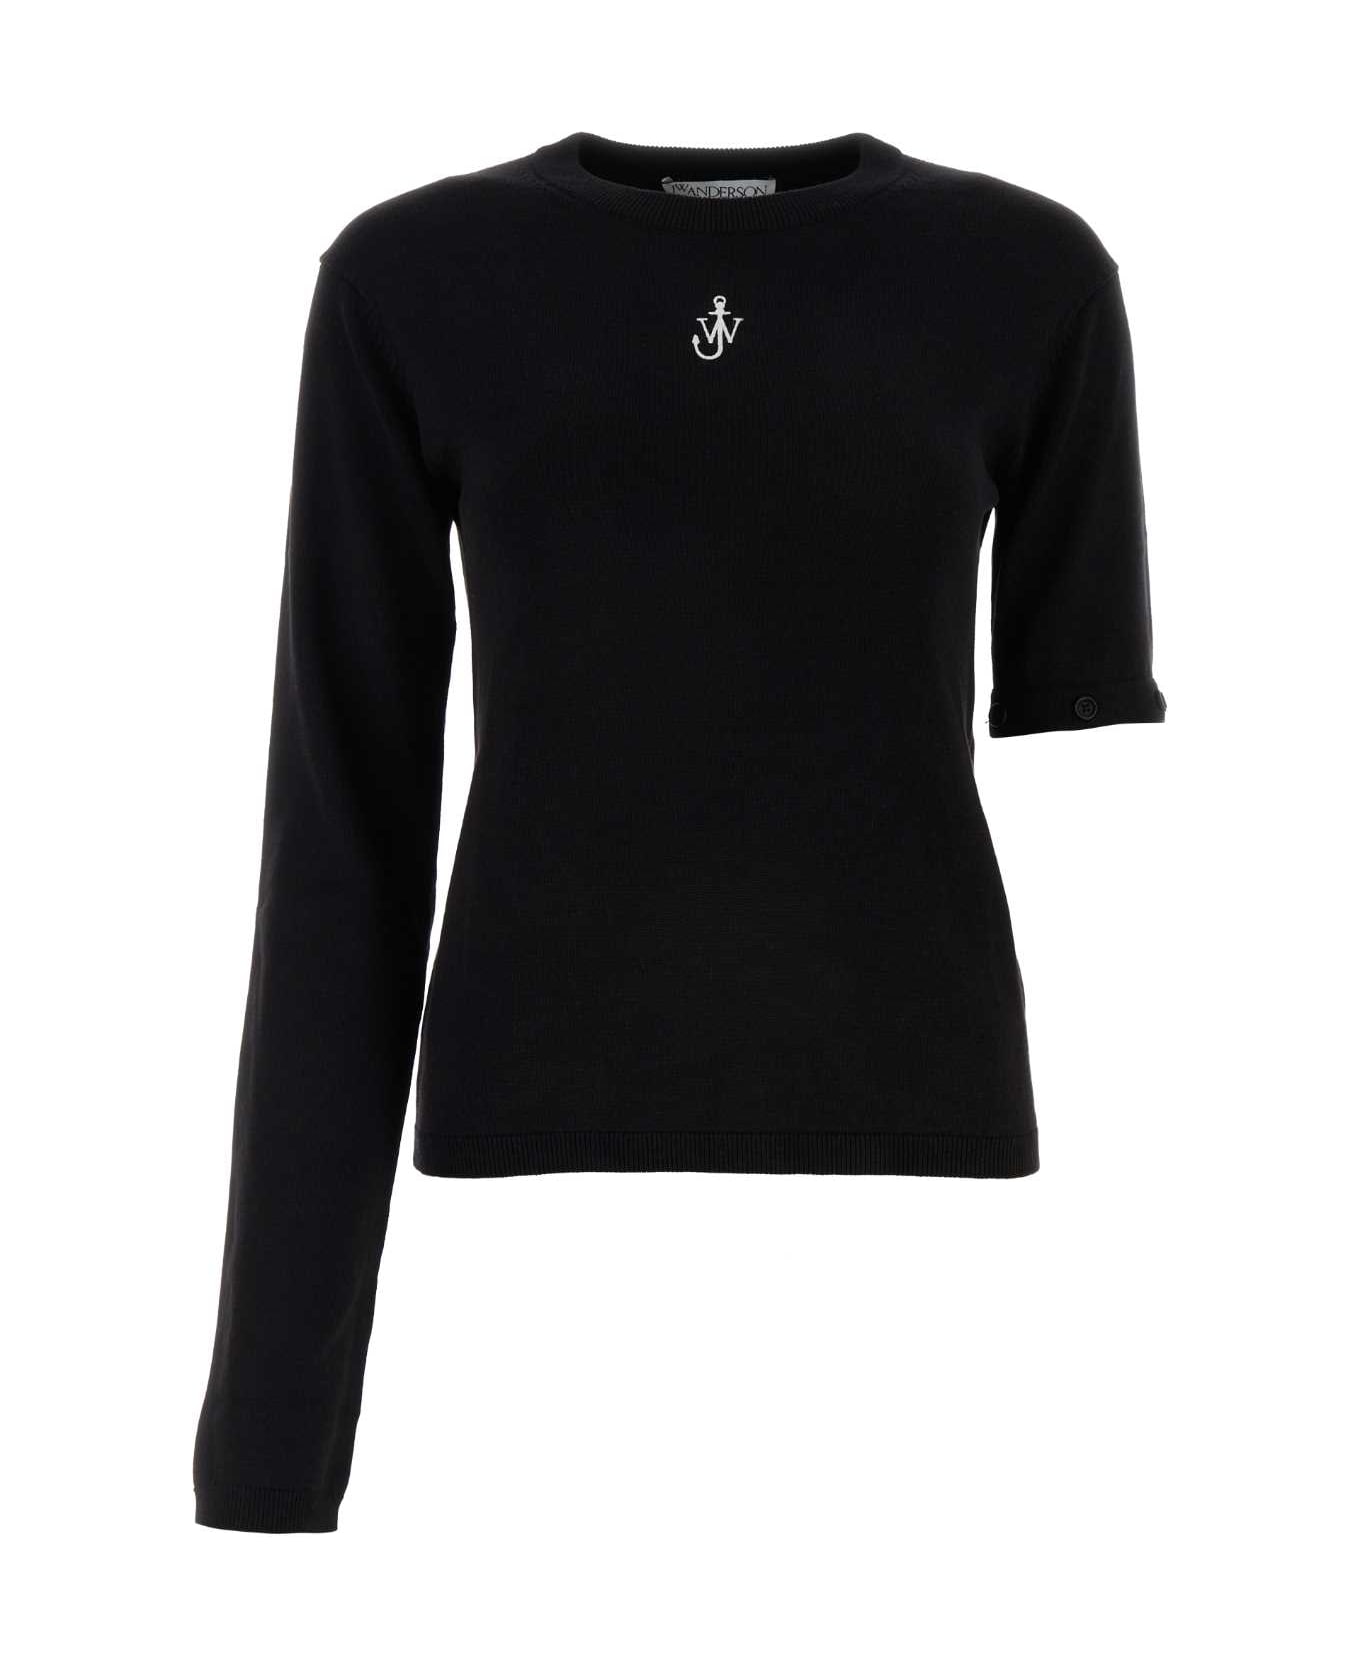 J.W. Anderson Black Silk Blend Sweater - Black